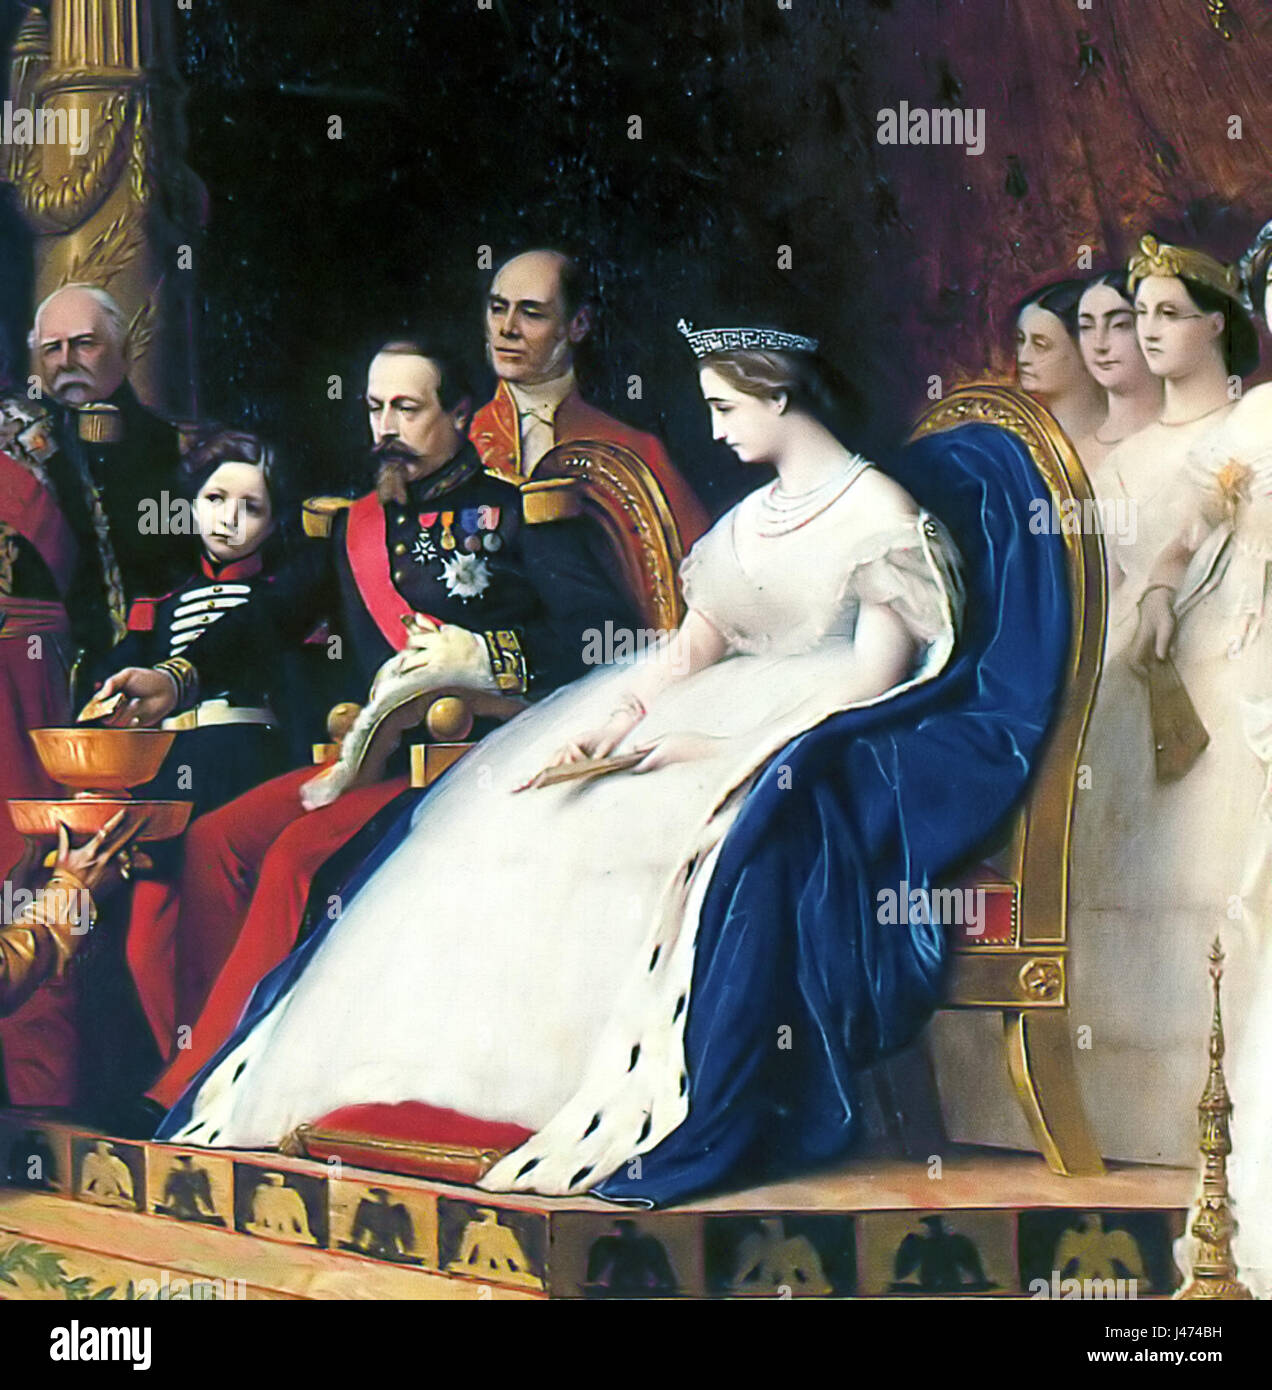 Napoleon III and Empress Eugenie], ca. 1865 Stock Photo - Alamy